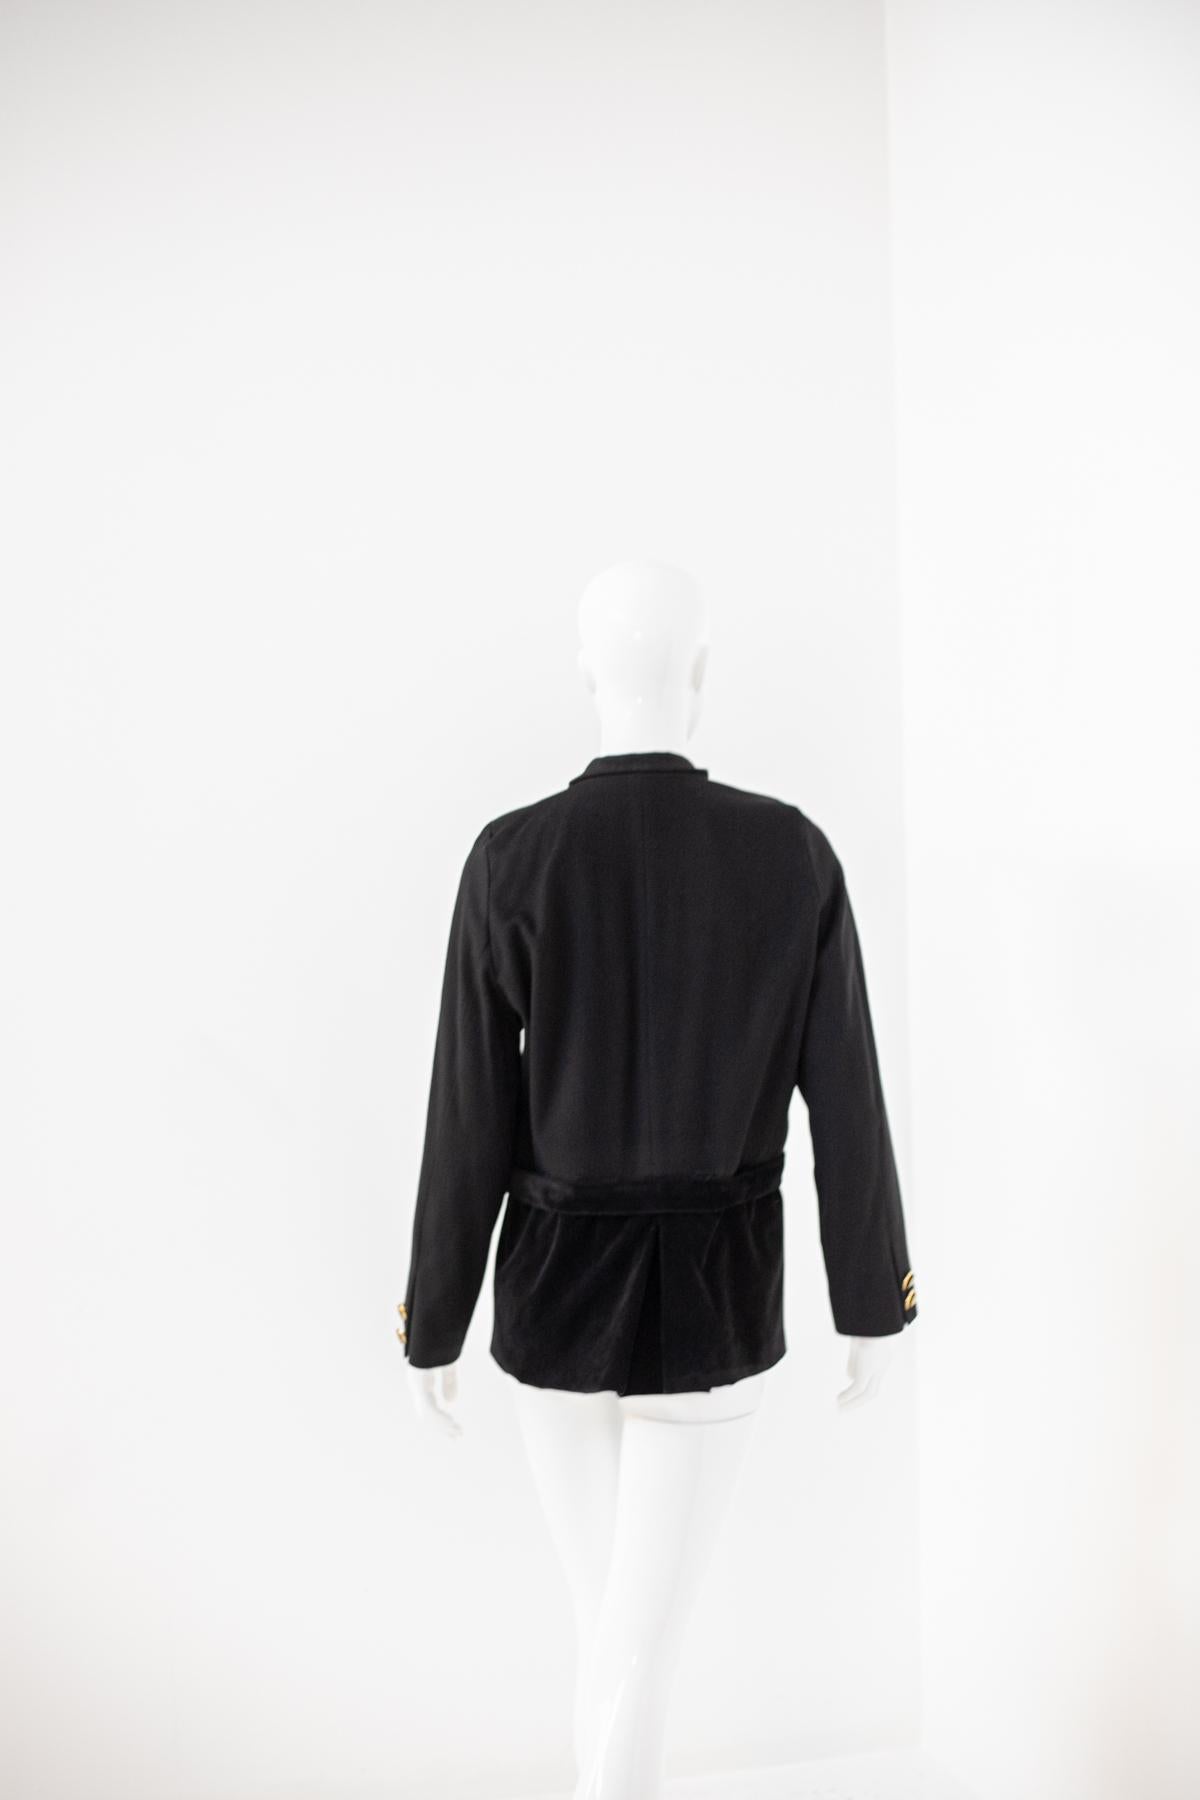 Gianni Versace Vintage Velvet Jacket 4